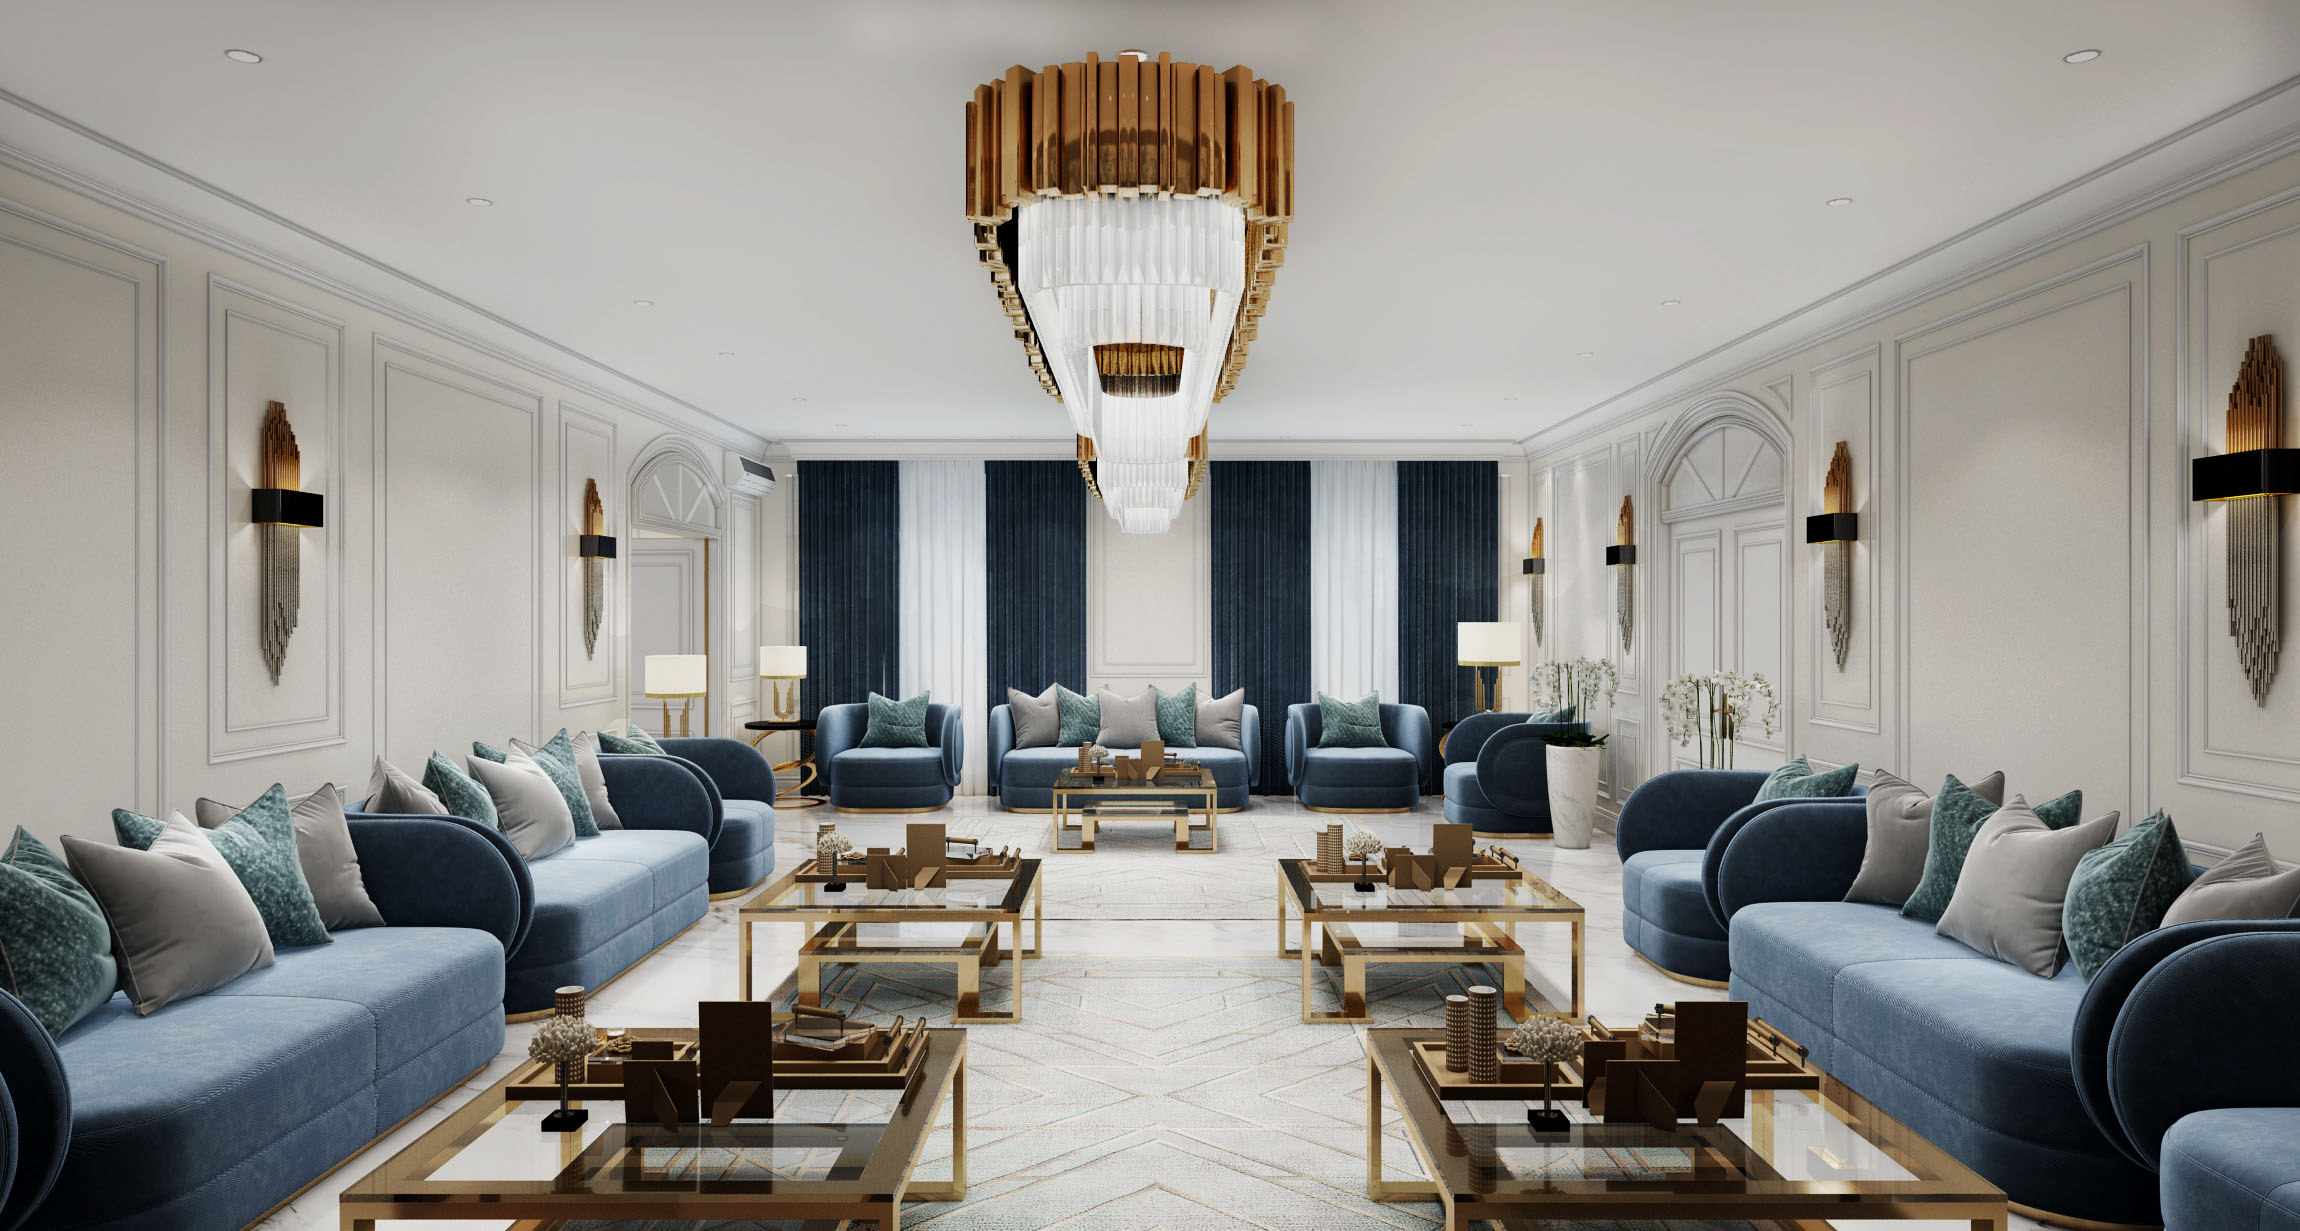 Nabina Interiors’ designs of majlis represent luxury, elegancy and comfortability.